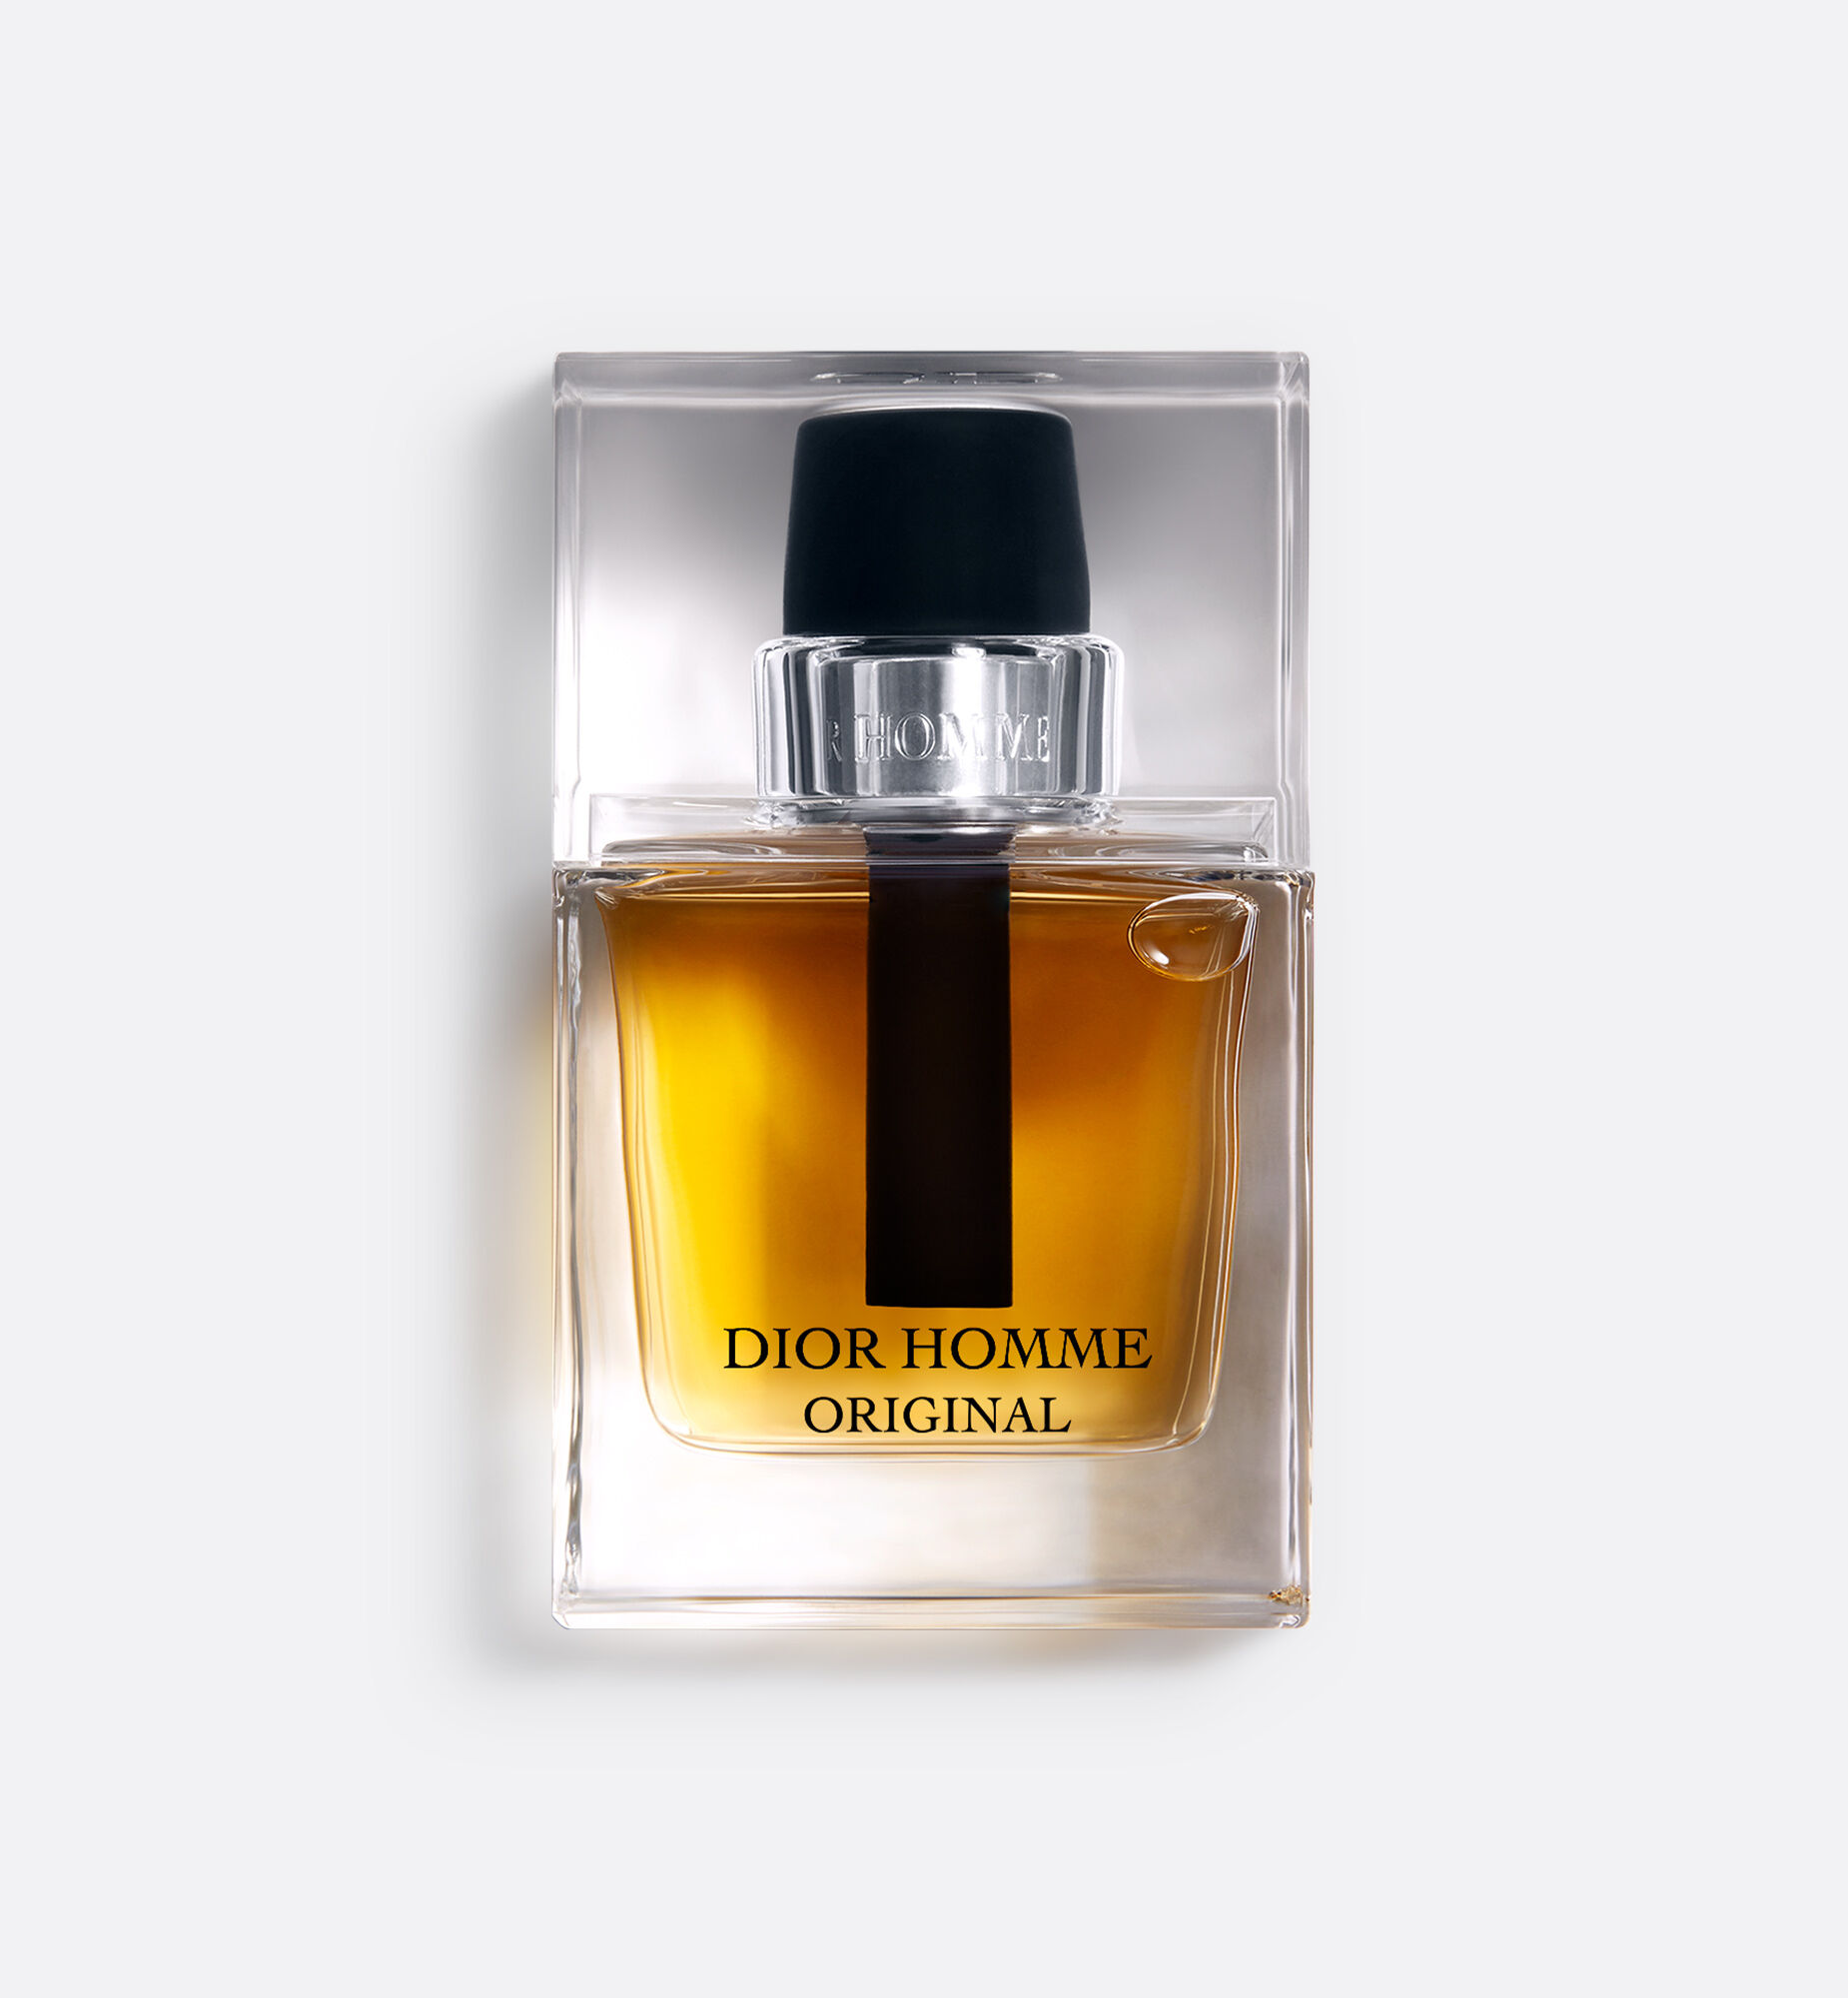 Eau Sauvage Parfum 2017 By Christian Dior Perfume For Men  Splash Fragrance